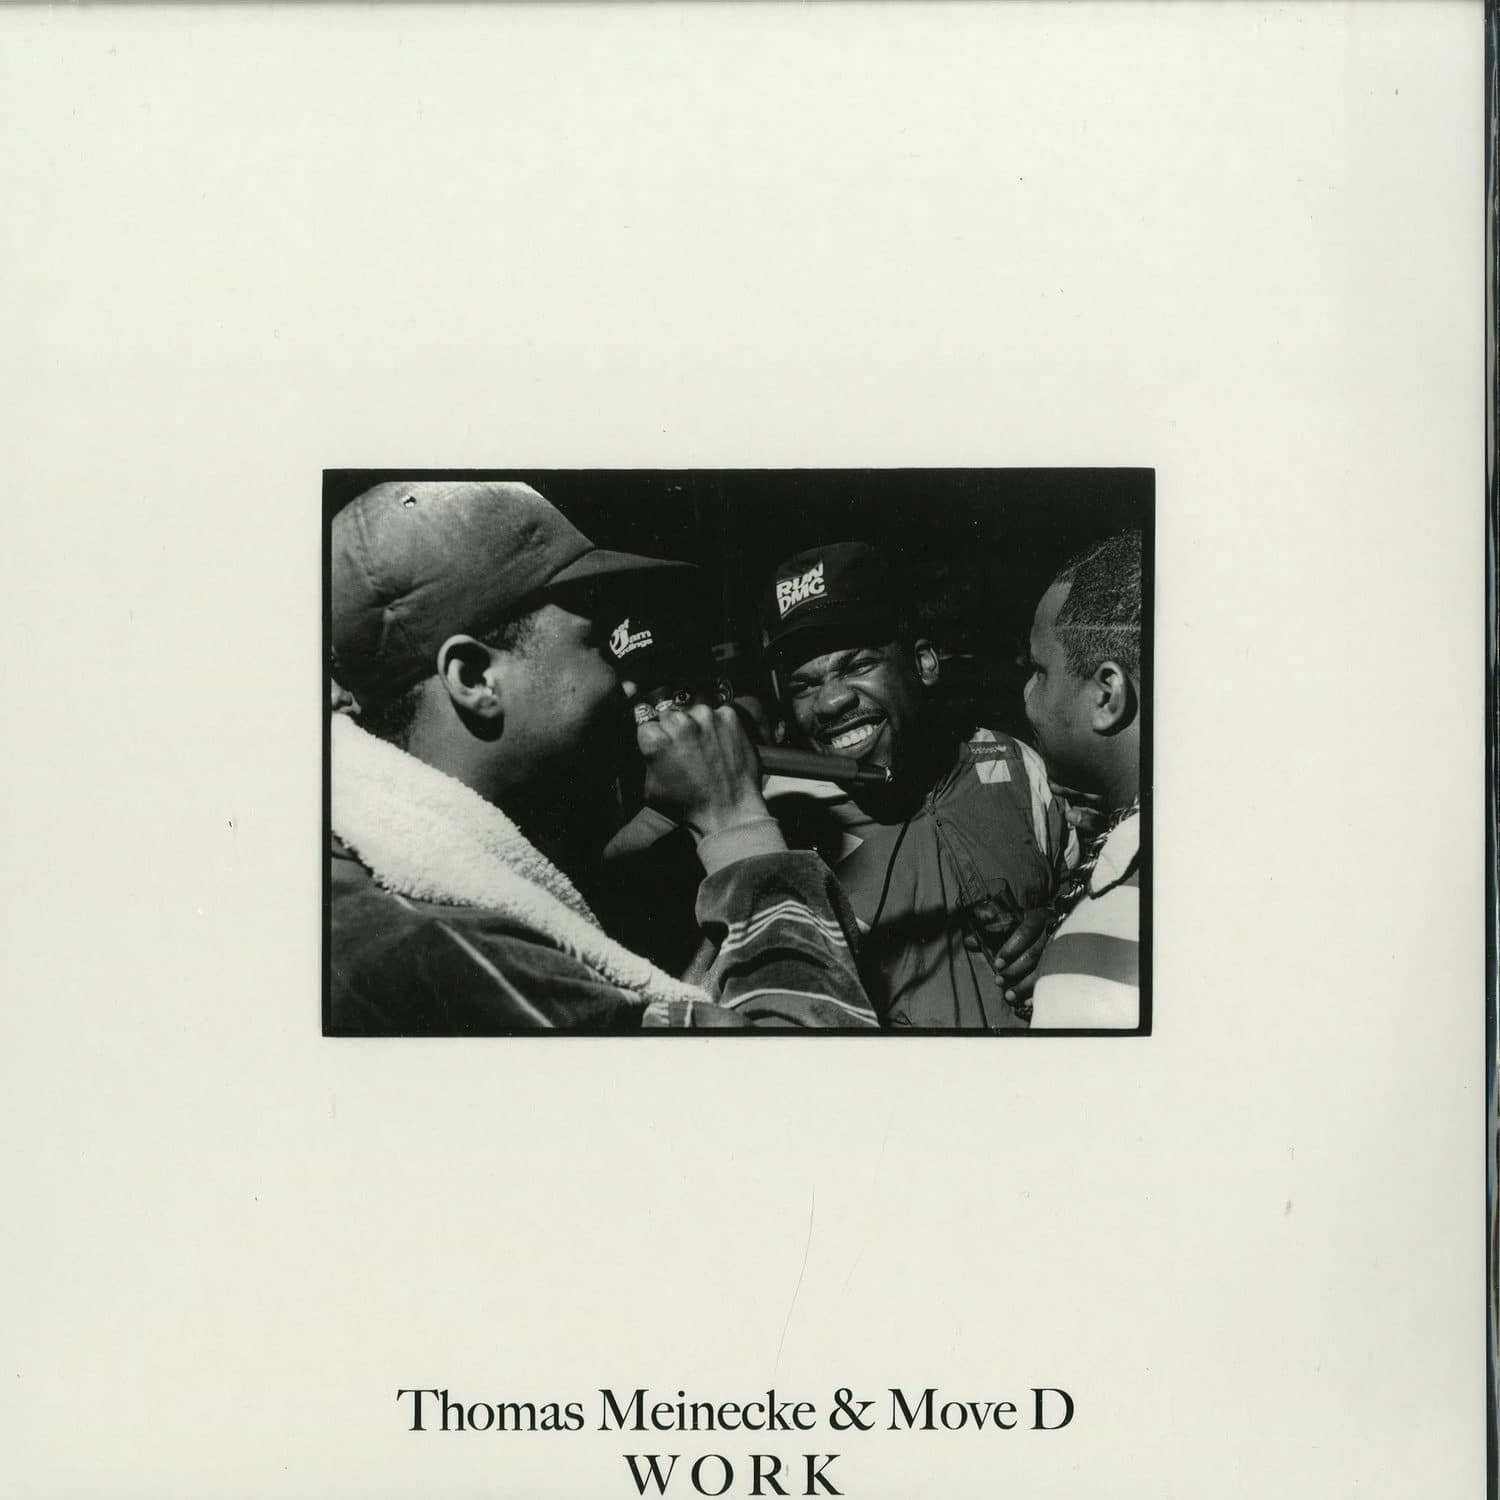 Thomas Meinecke & Move D - WORK